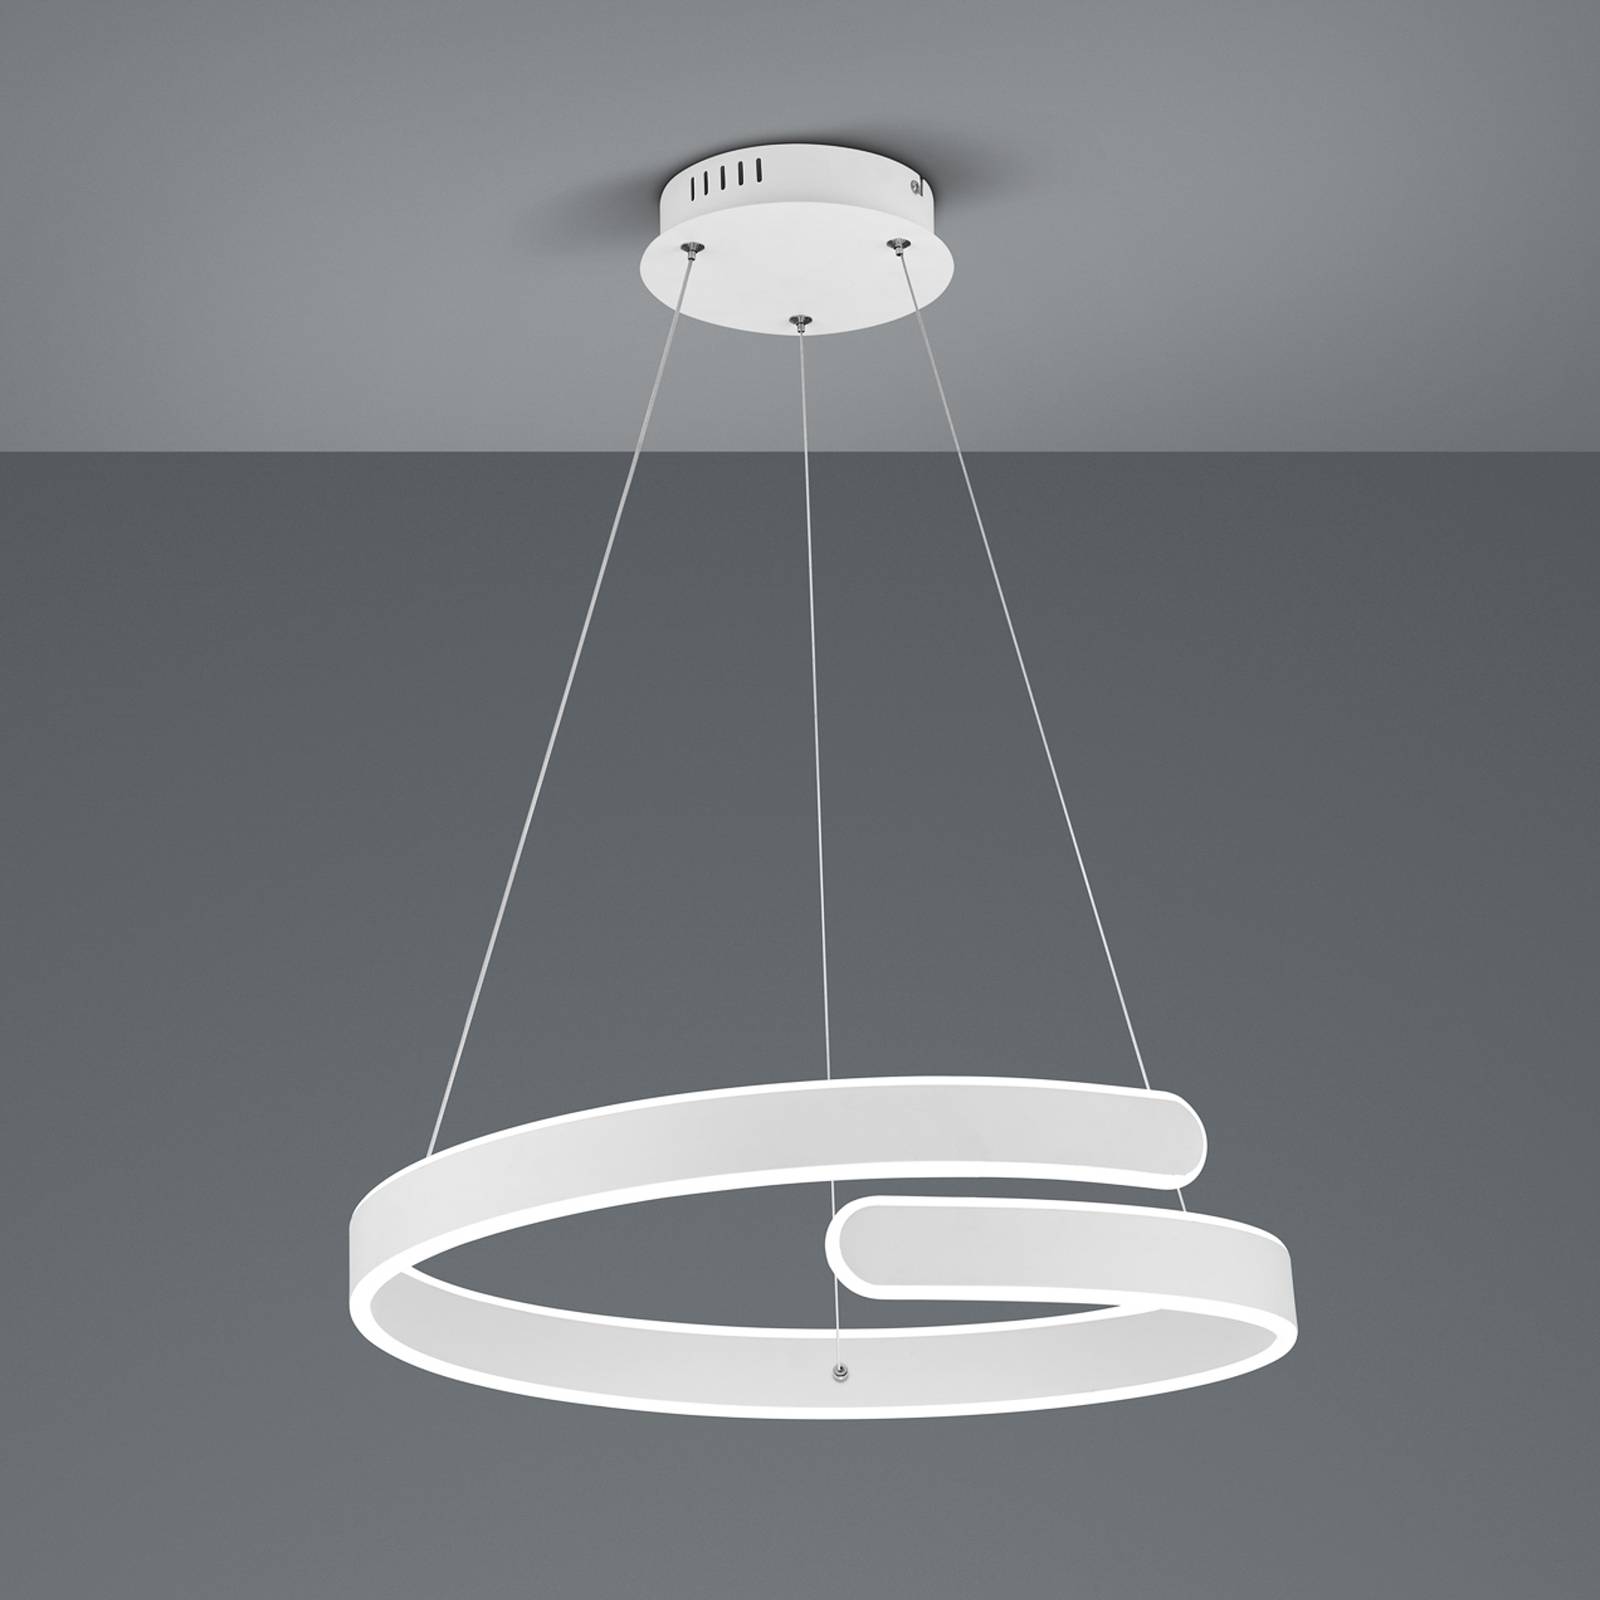 Image of Reality Leuchten Suspension LED Parma, variateur switch, blanche 4017807525724